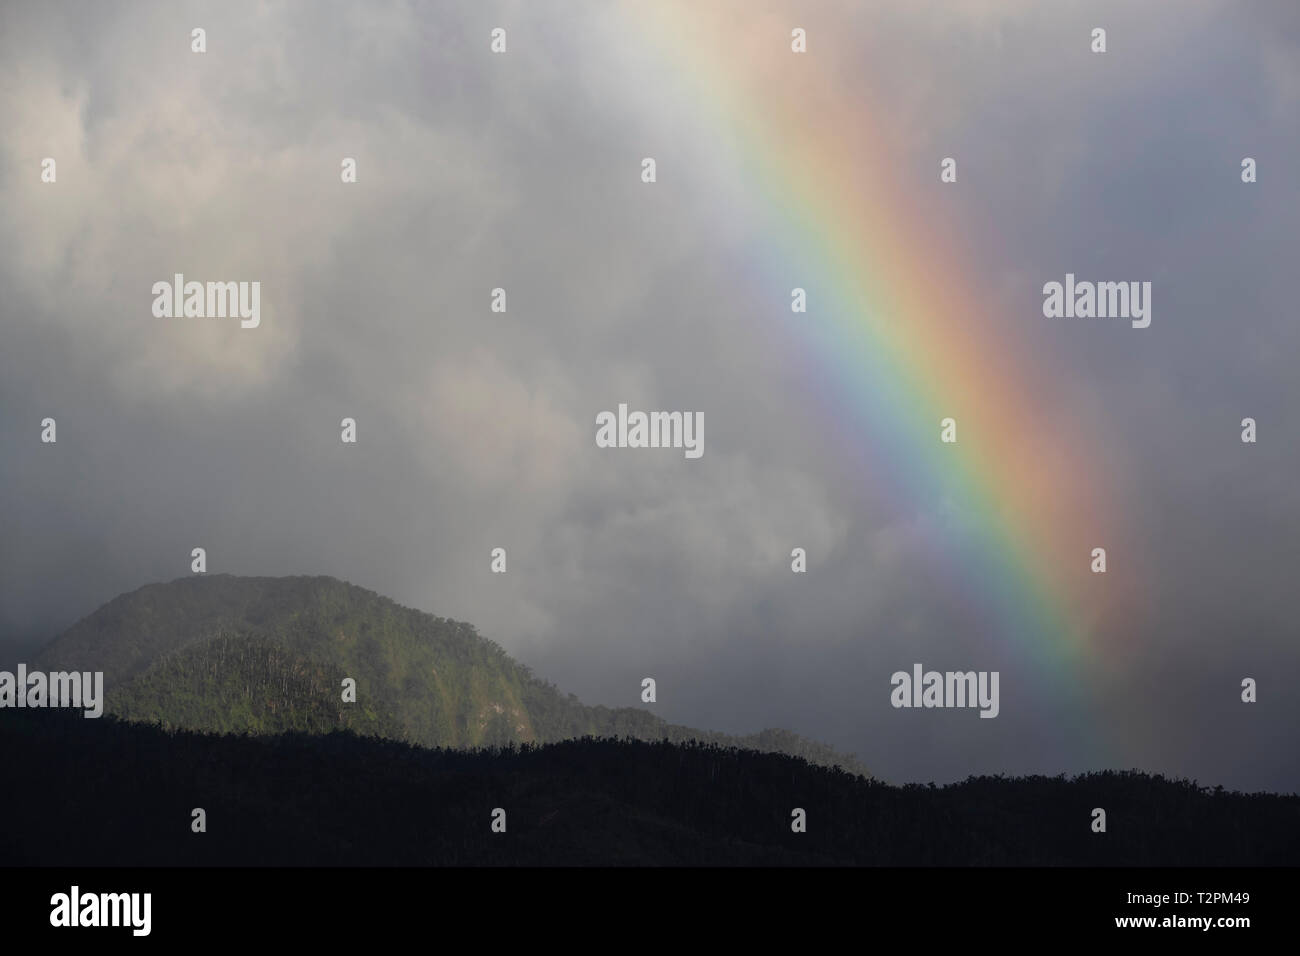 Rainbow over mountainous landscape, Dominica, Caribbean Stock Photo